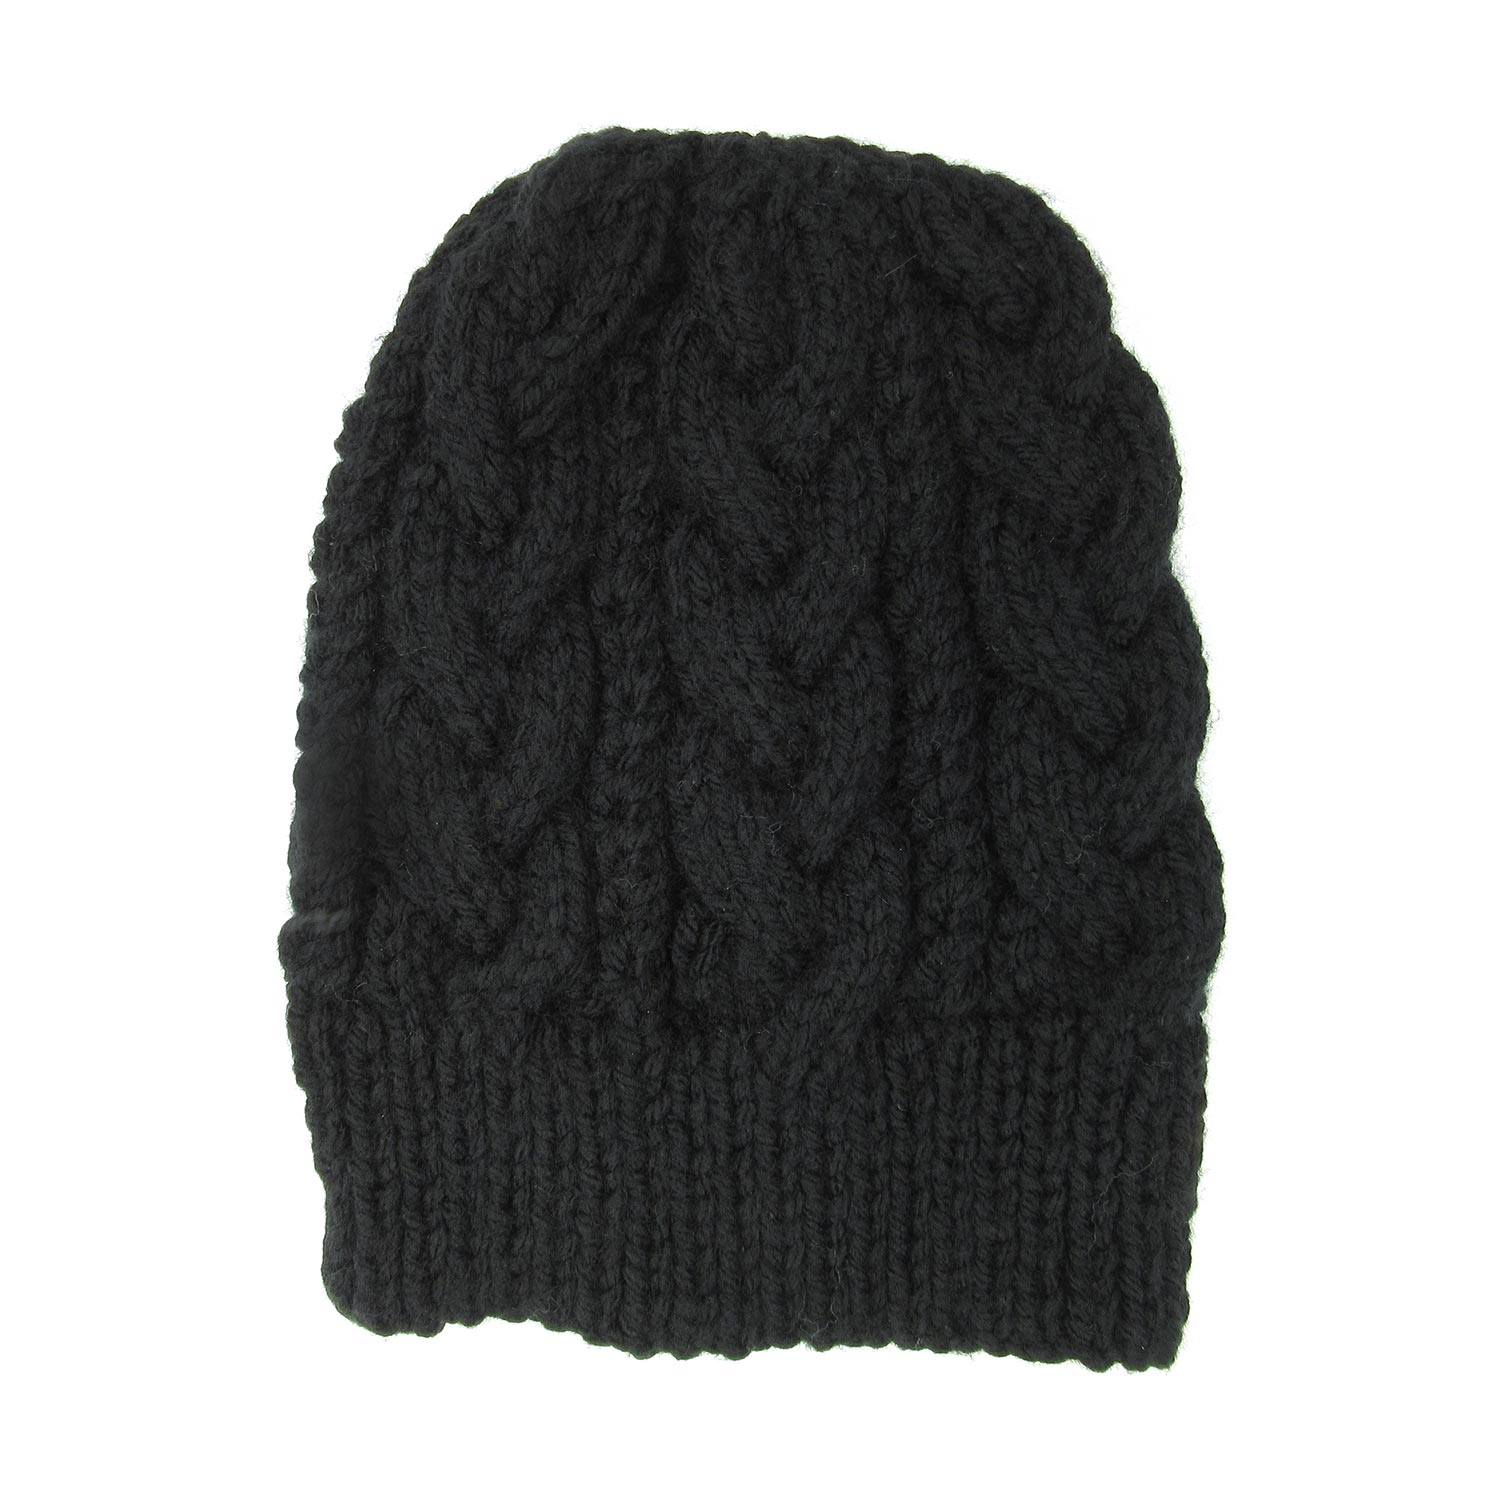 Simply Karoo Cable Knit Beanies Headwear Simply Karoo black 